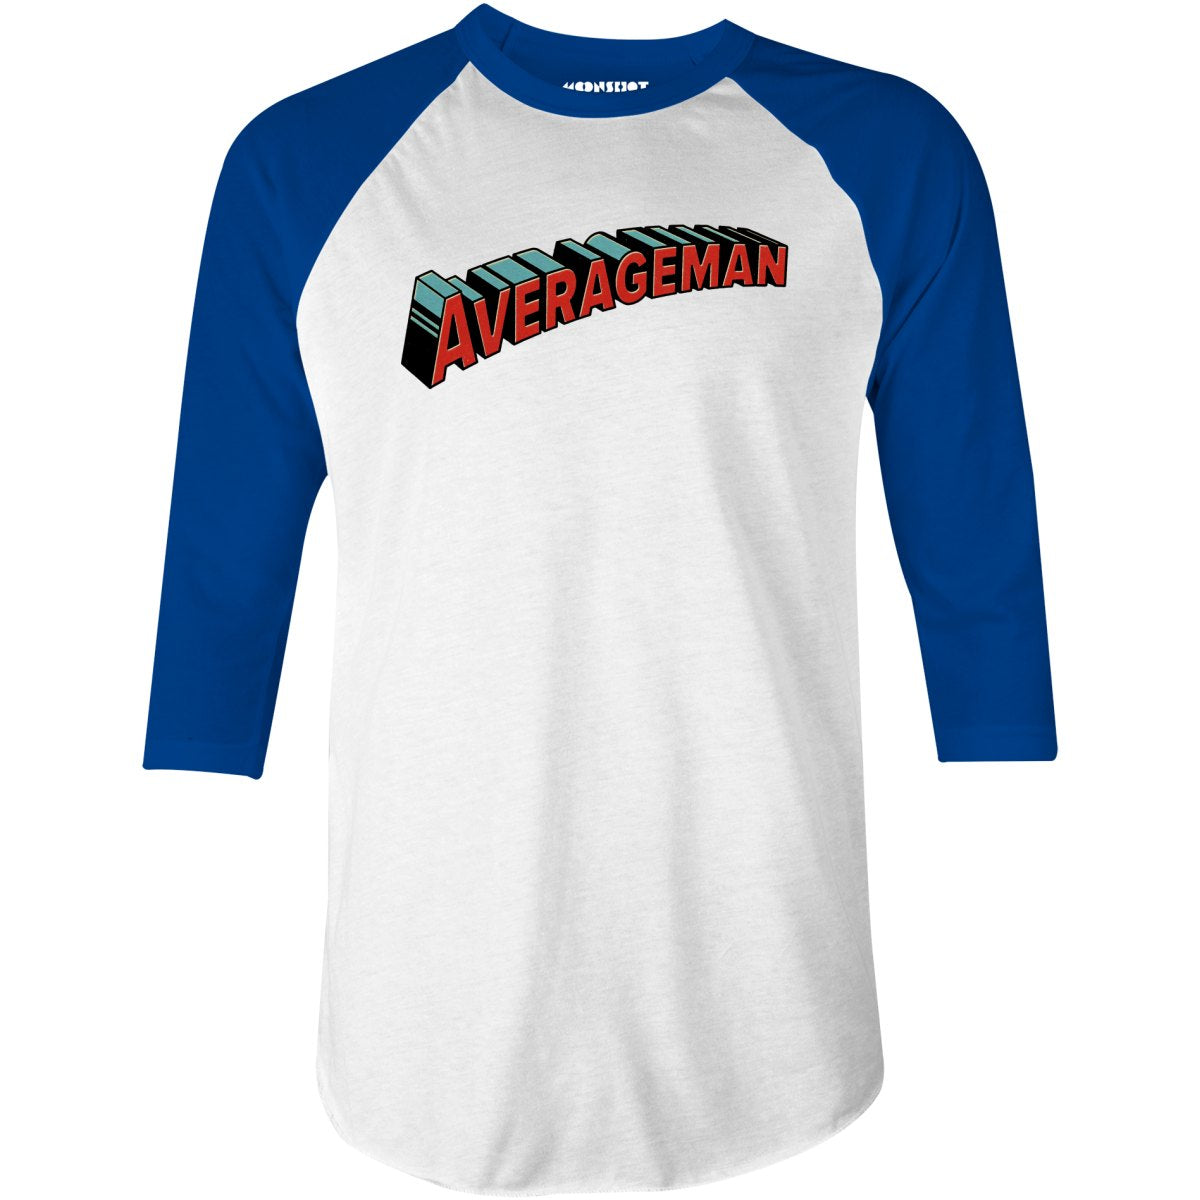 Averageman - 3/4 Sleeve Raglan T-Shirt